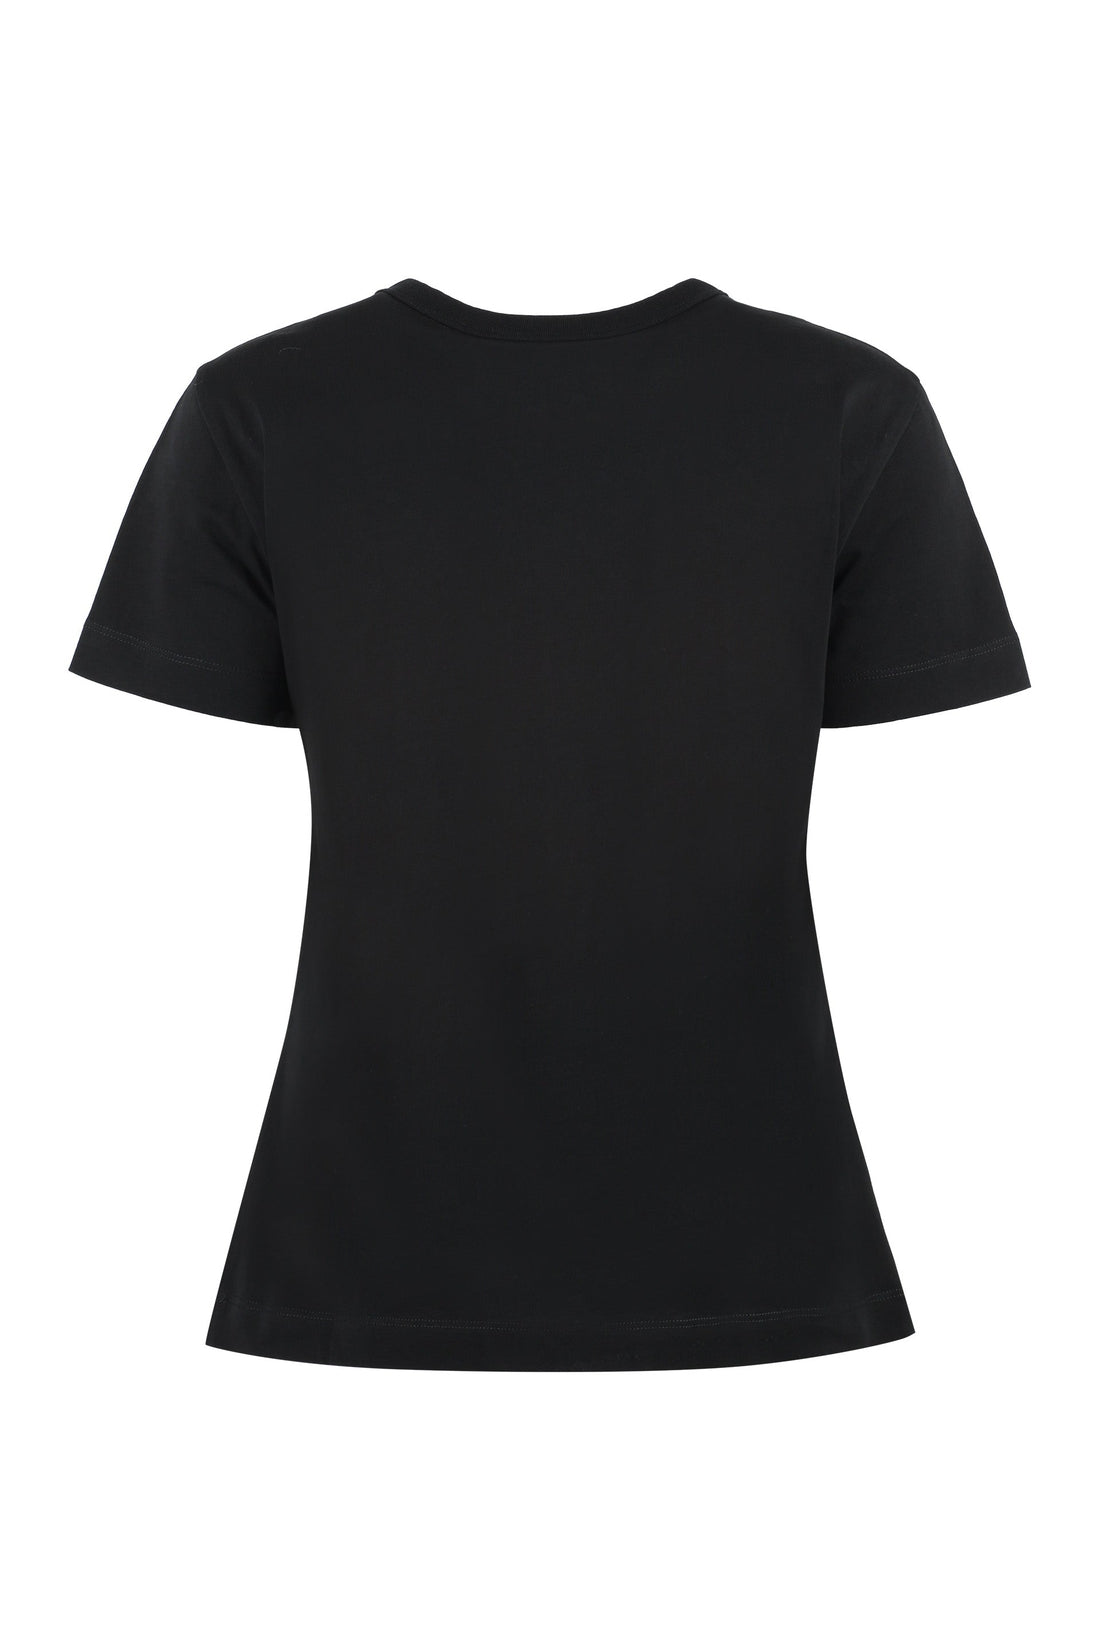 Boutique Moschino-OUTLET-SALE-Printed cotton T-shirt-ARCHIVIST